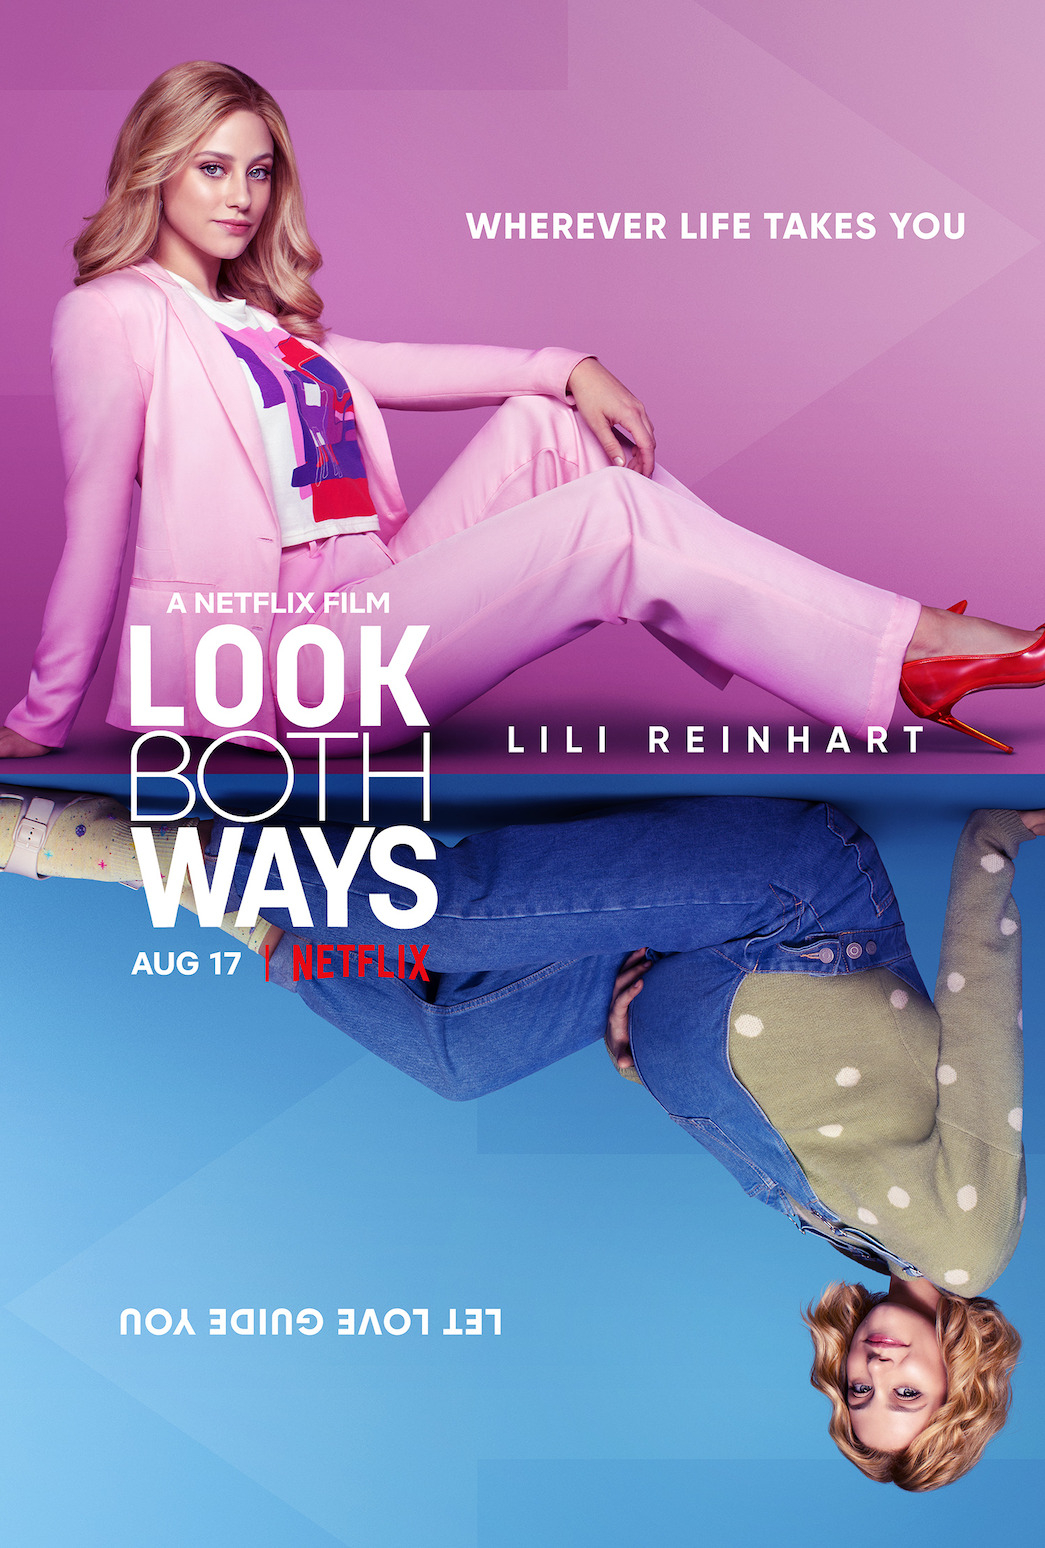 What is Lili Reinhart's Look Both Ways on Netflix?